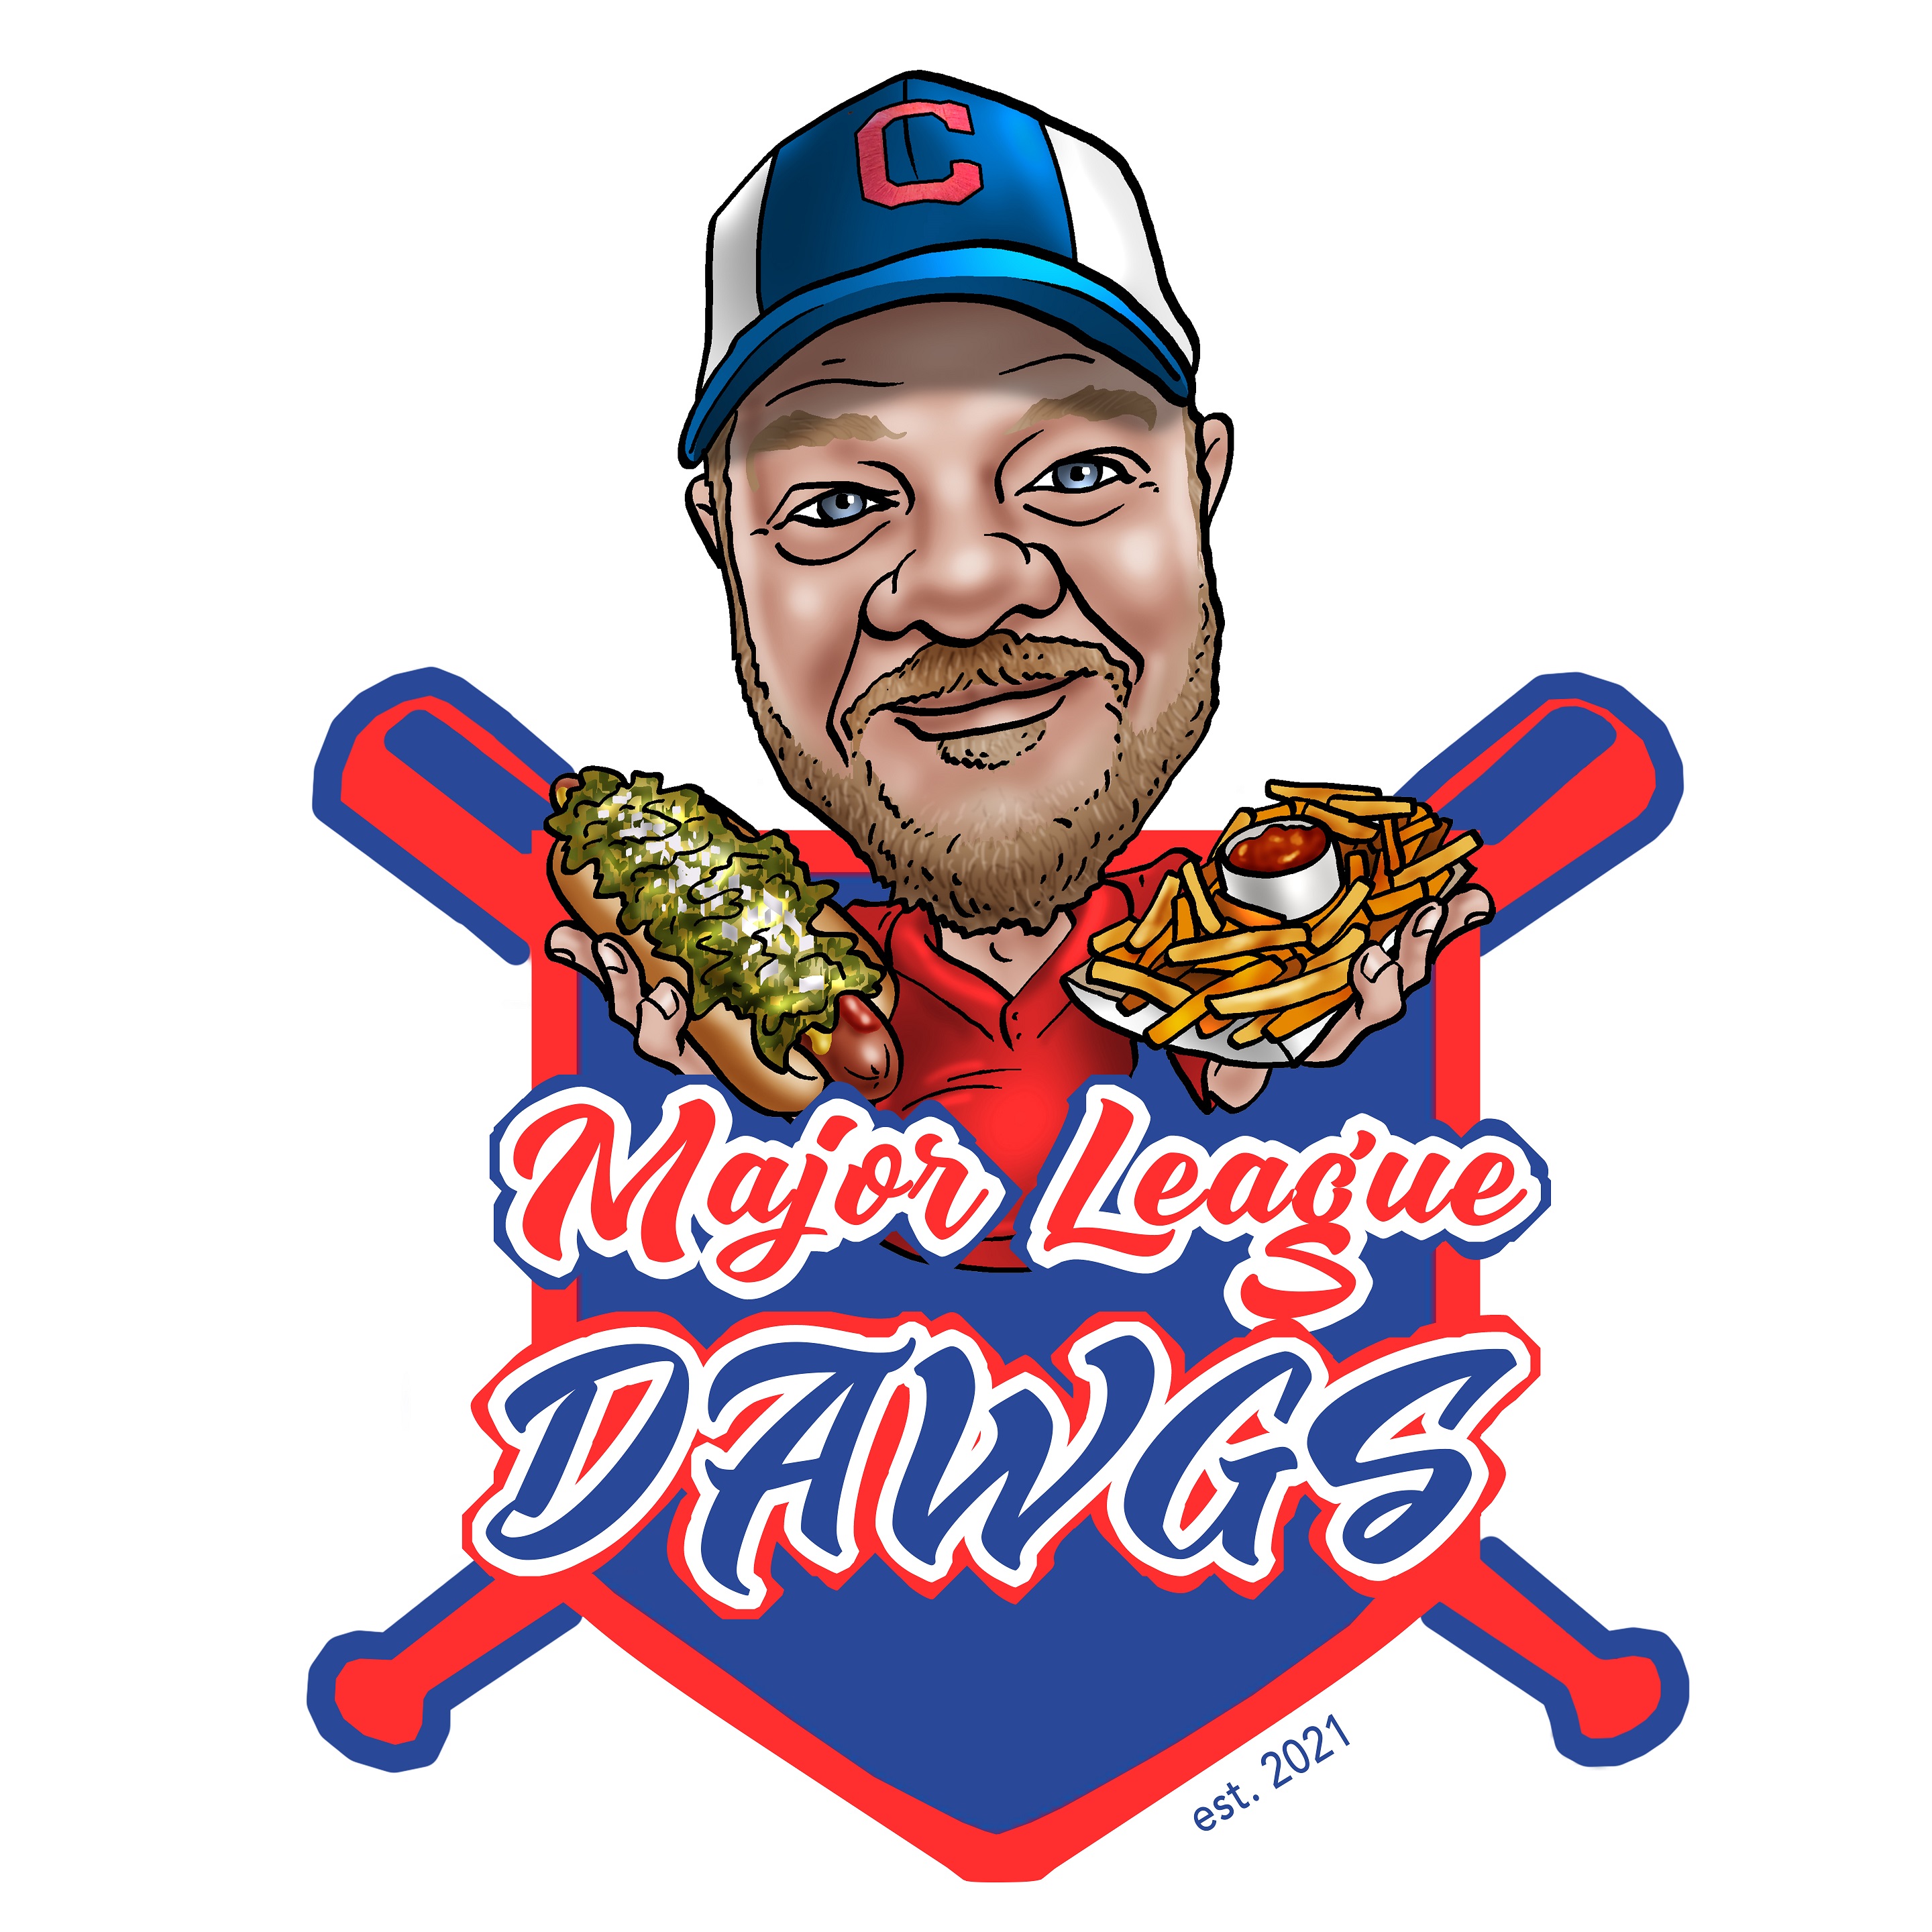 Major League Dawgs Logo